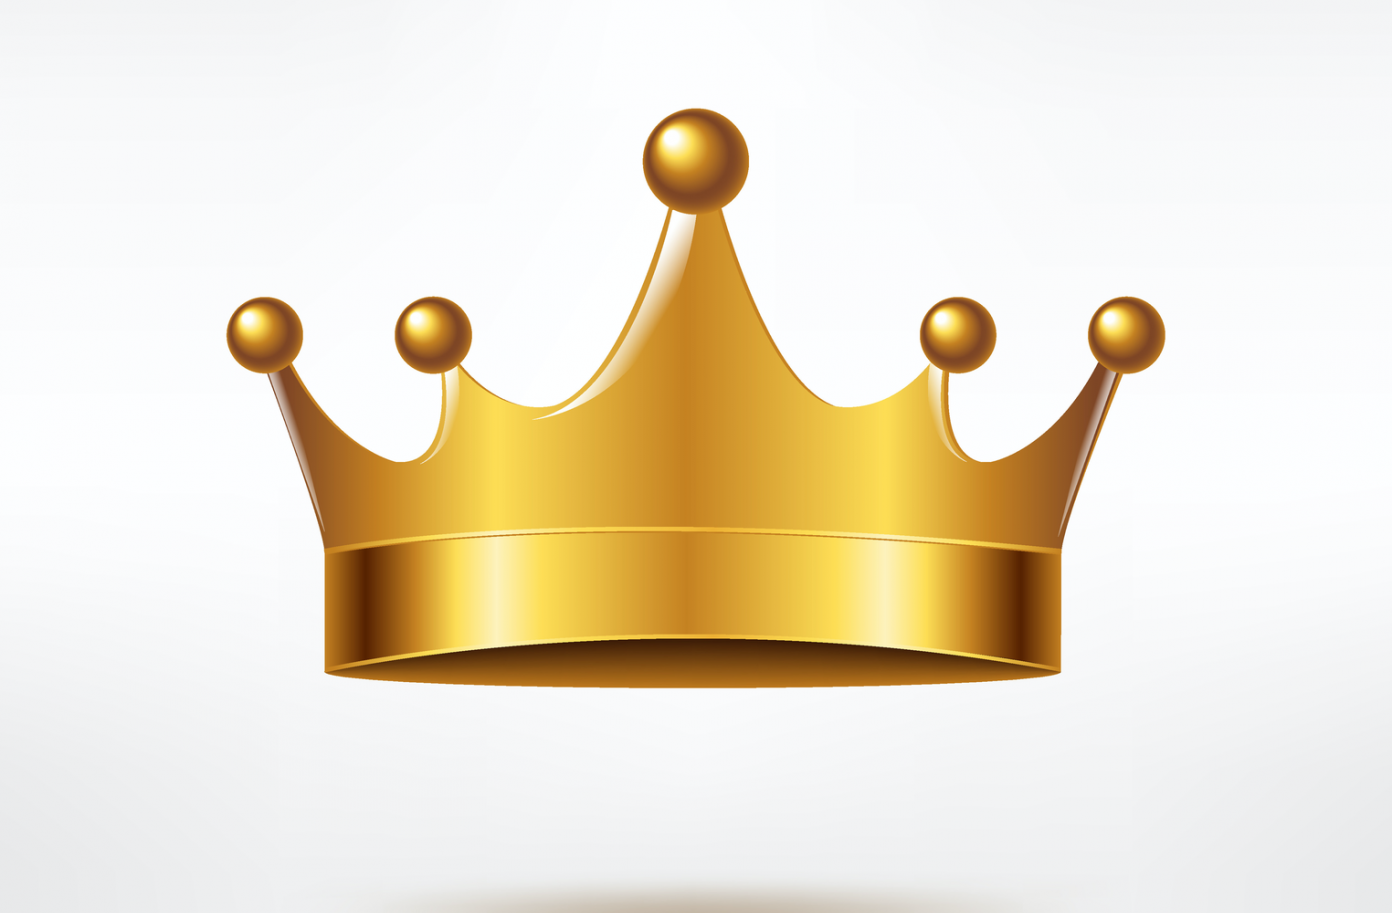 символ корона для ников пабг фото 68